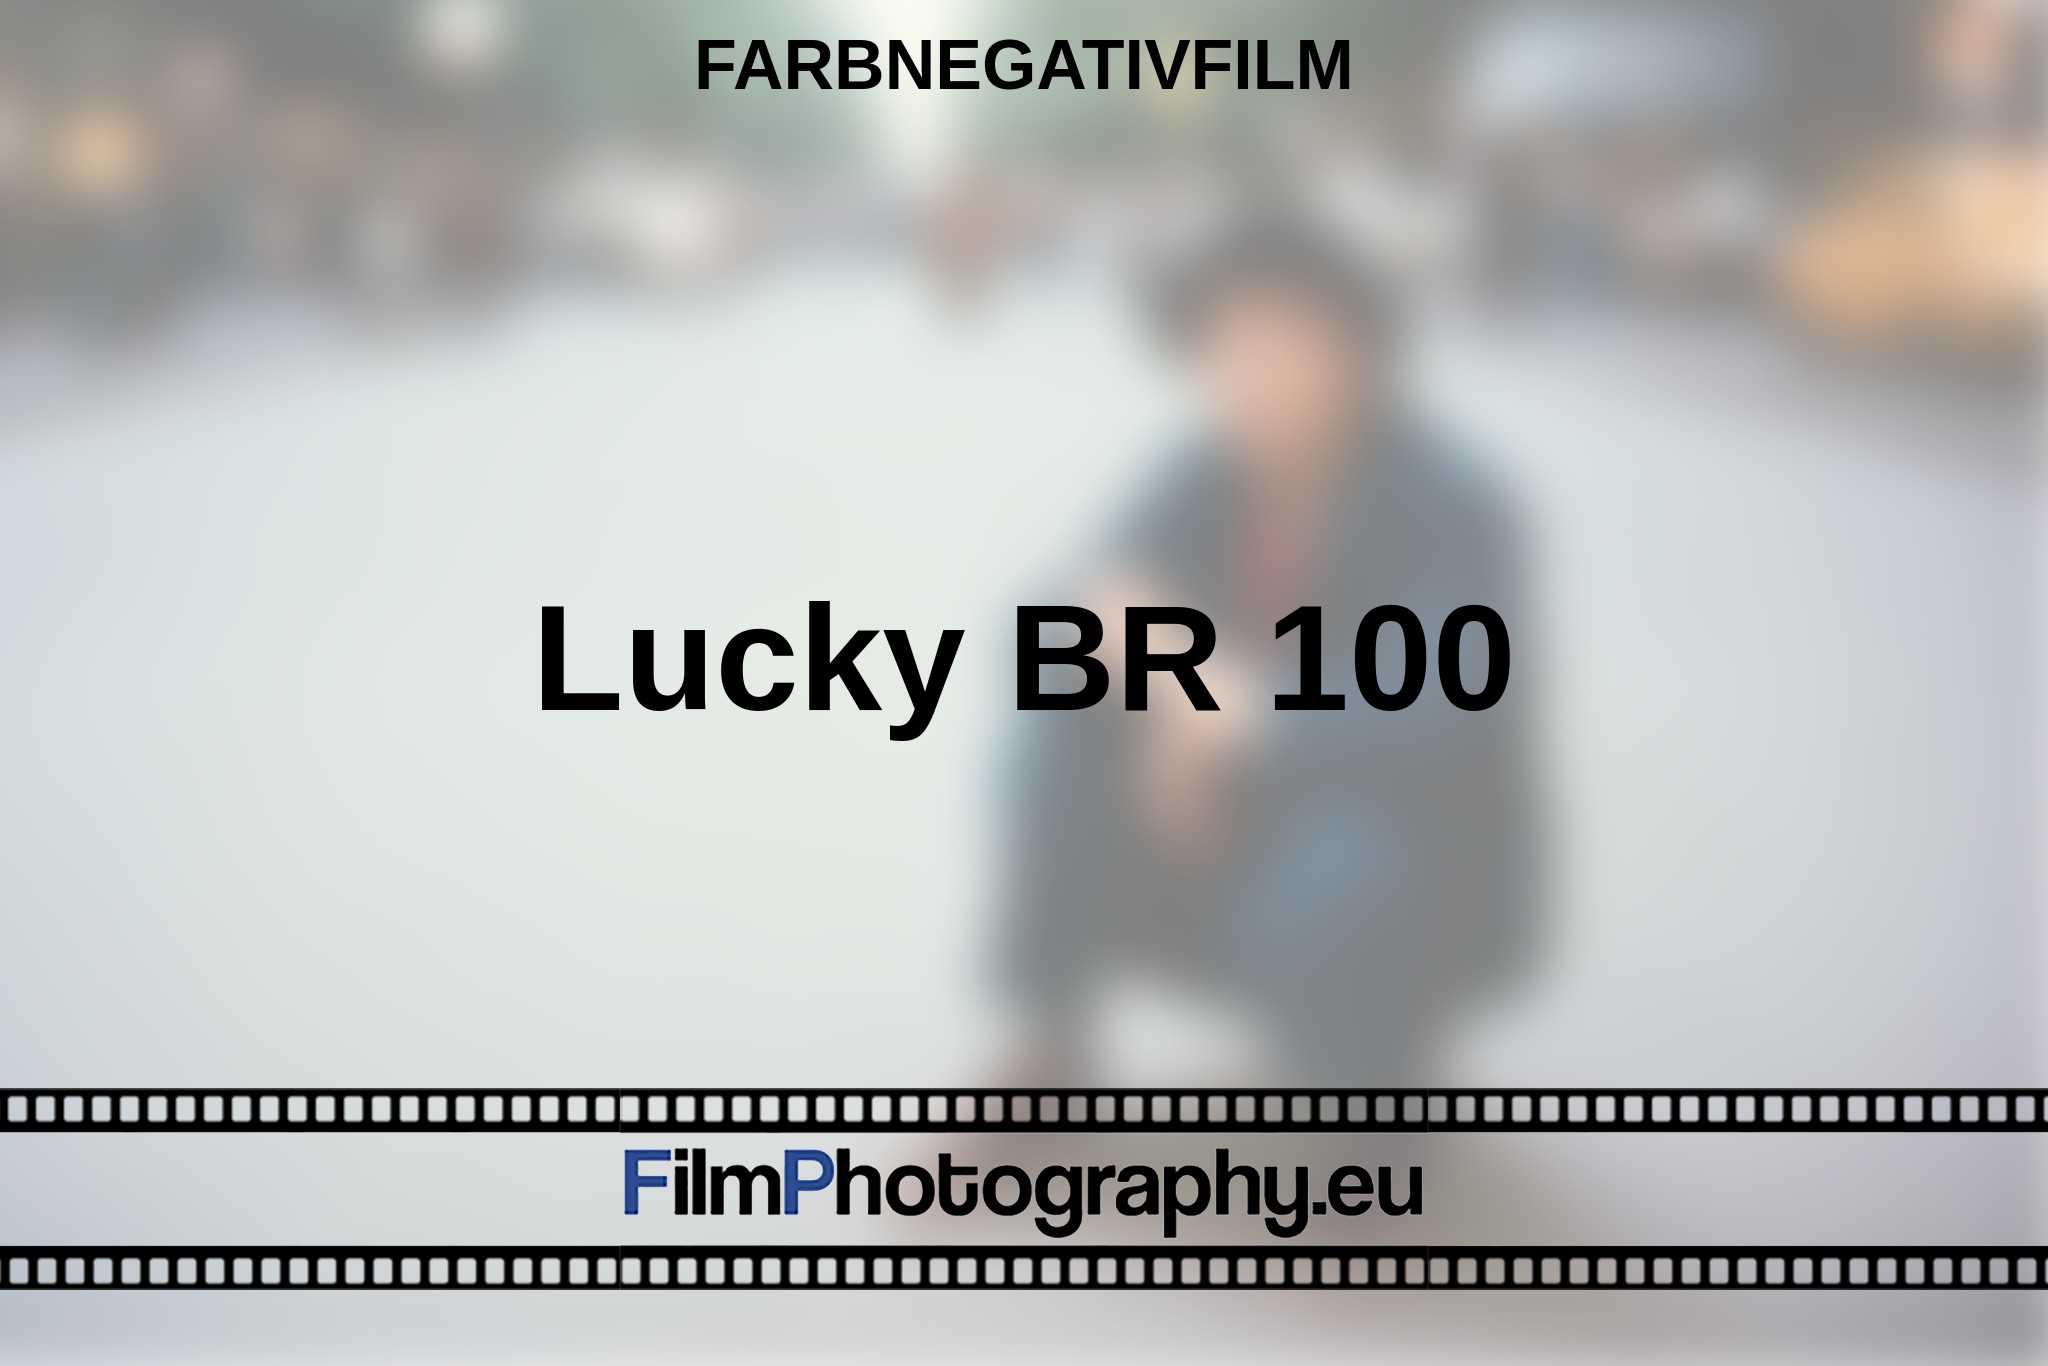 lucky-br-100-farbnegativfilm-bnv.jpg